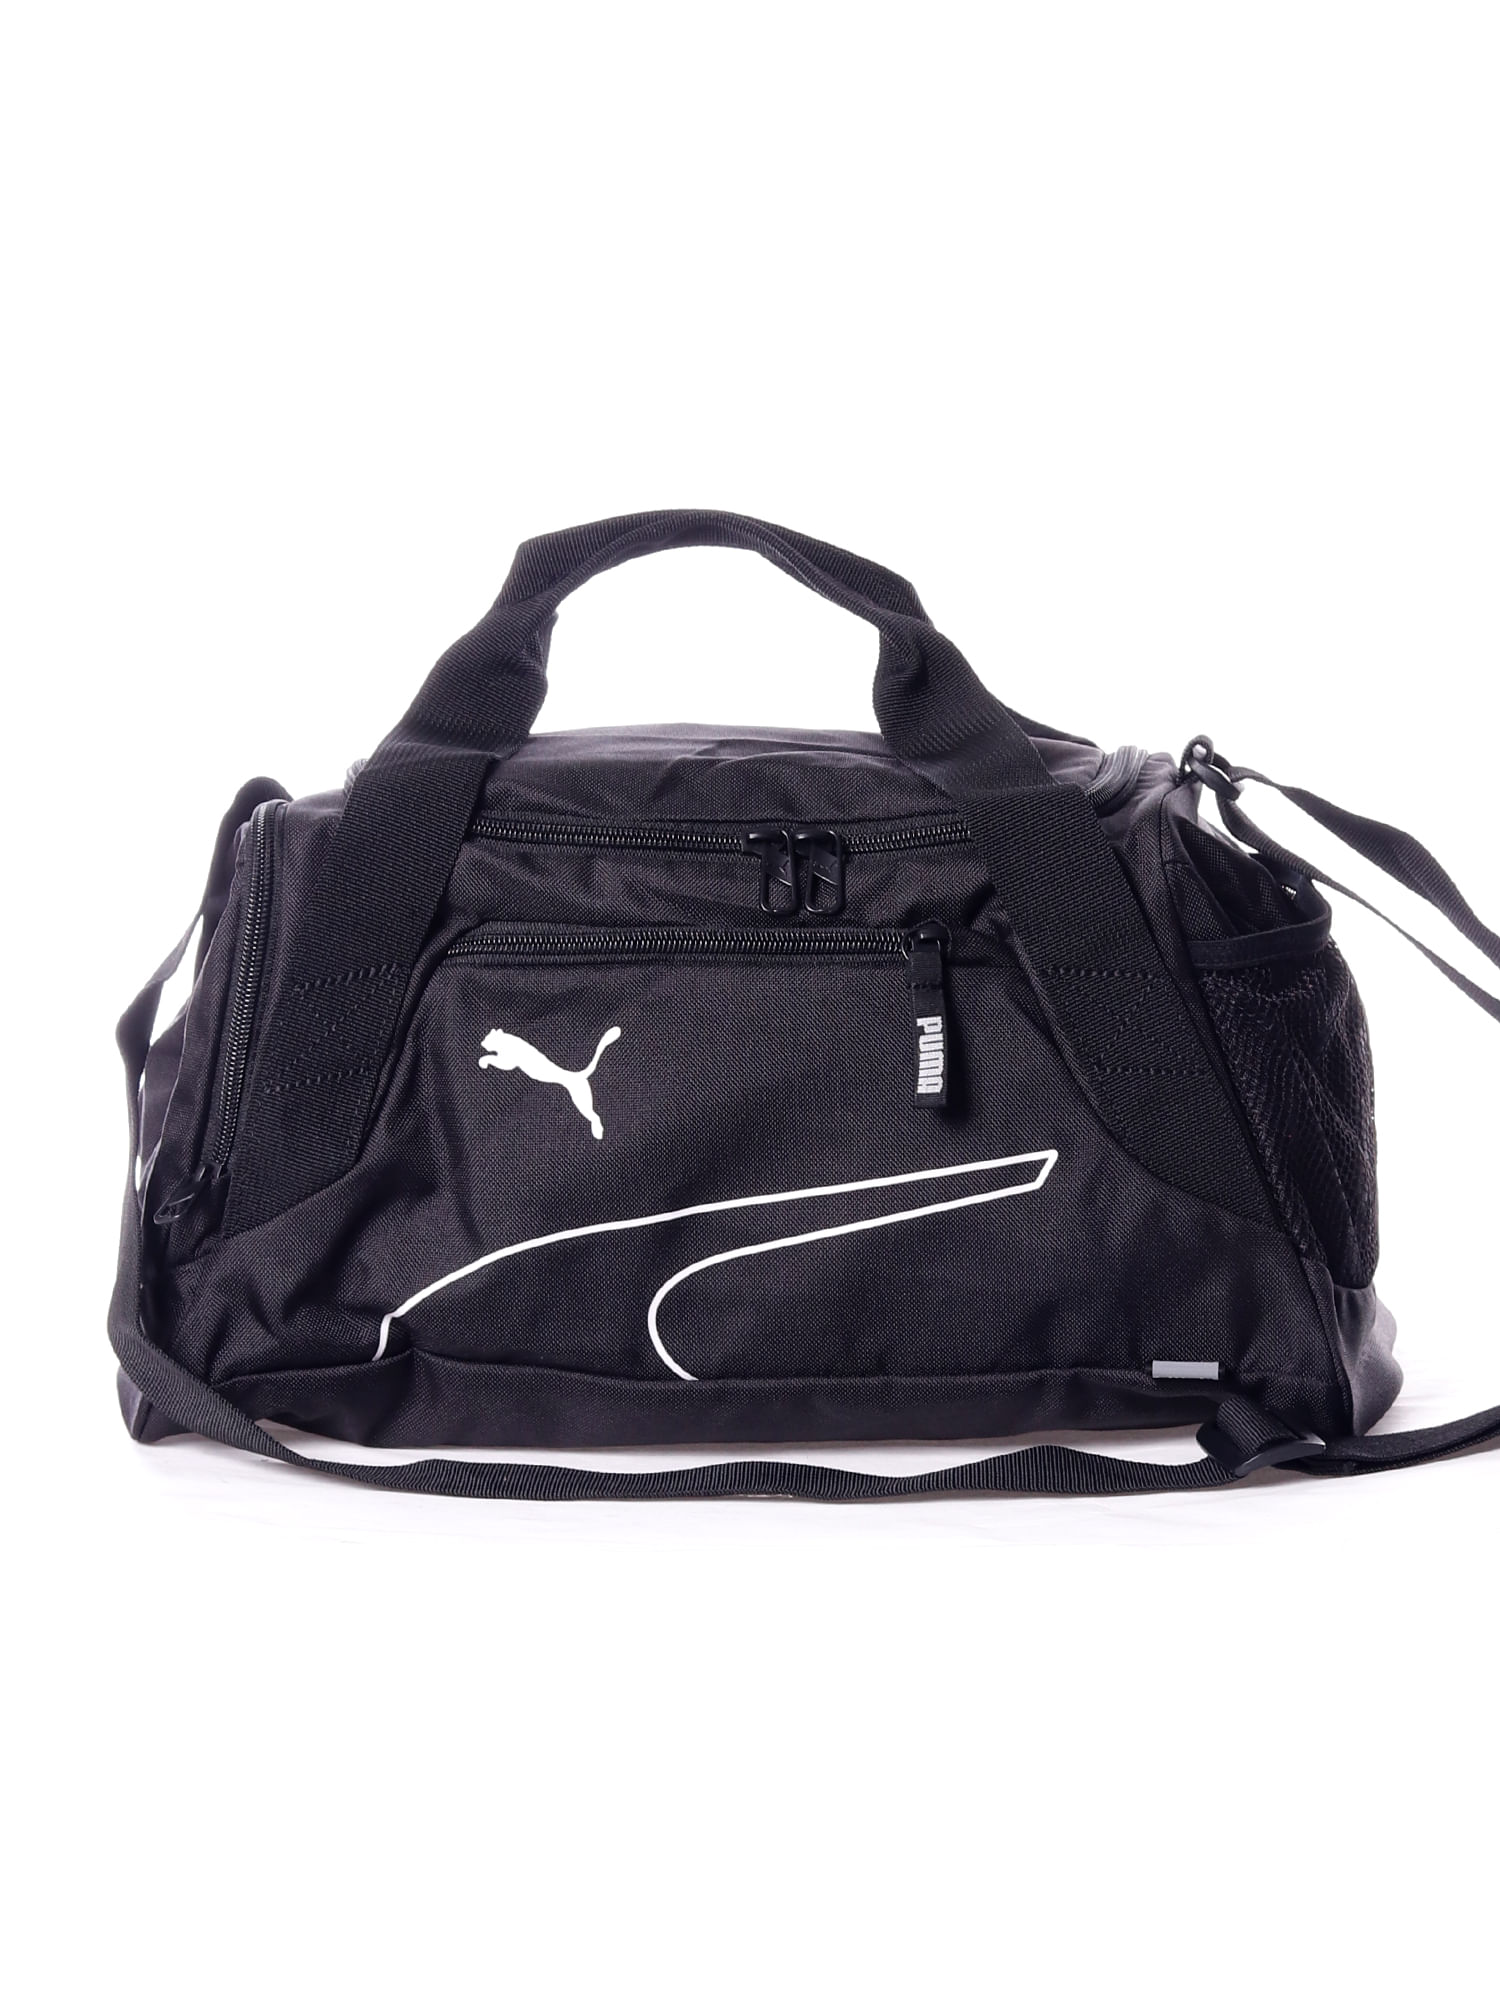 Mochila-puma-fundamentals-sports-bag-Black